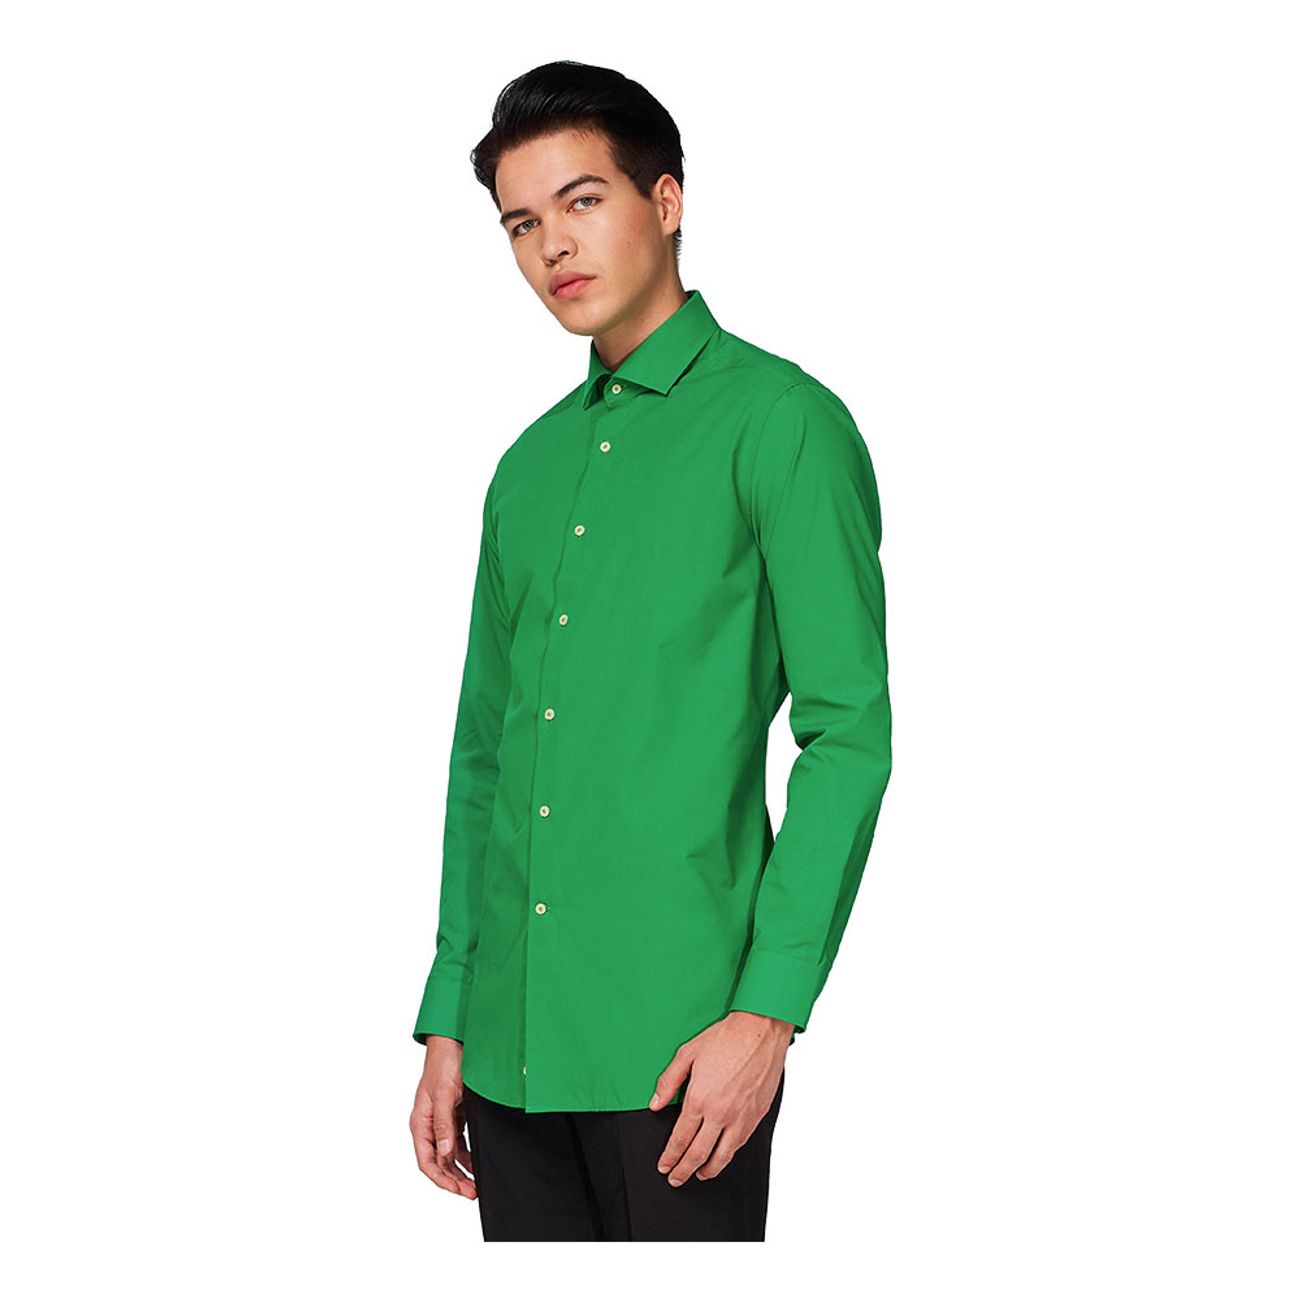 opposuits-evergreen-skjorta-1